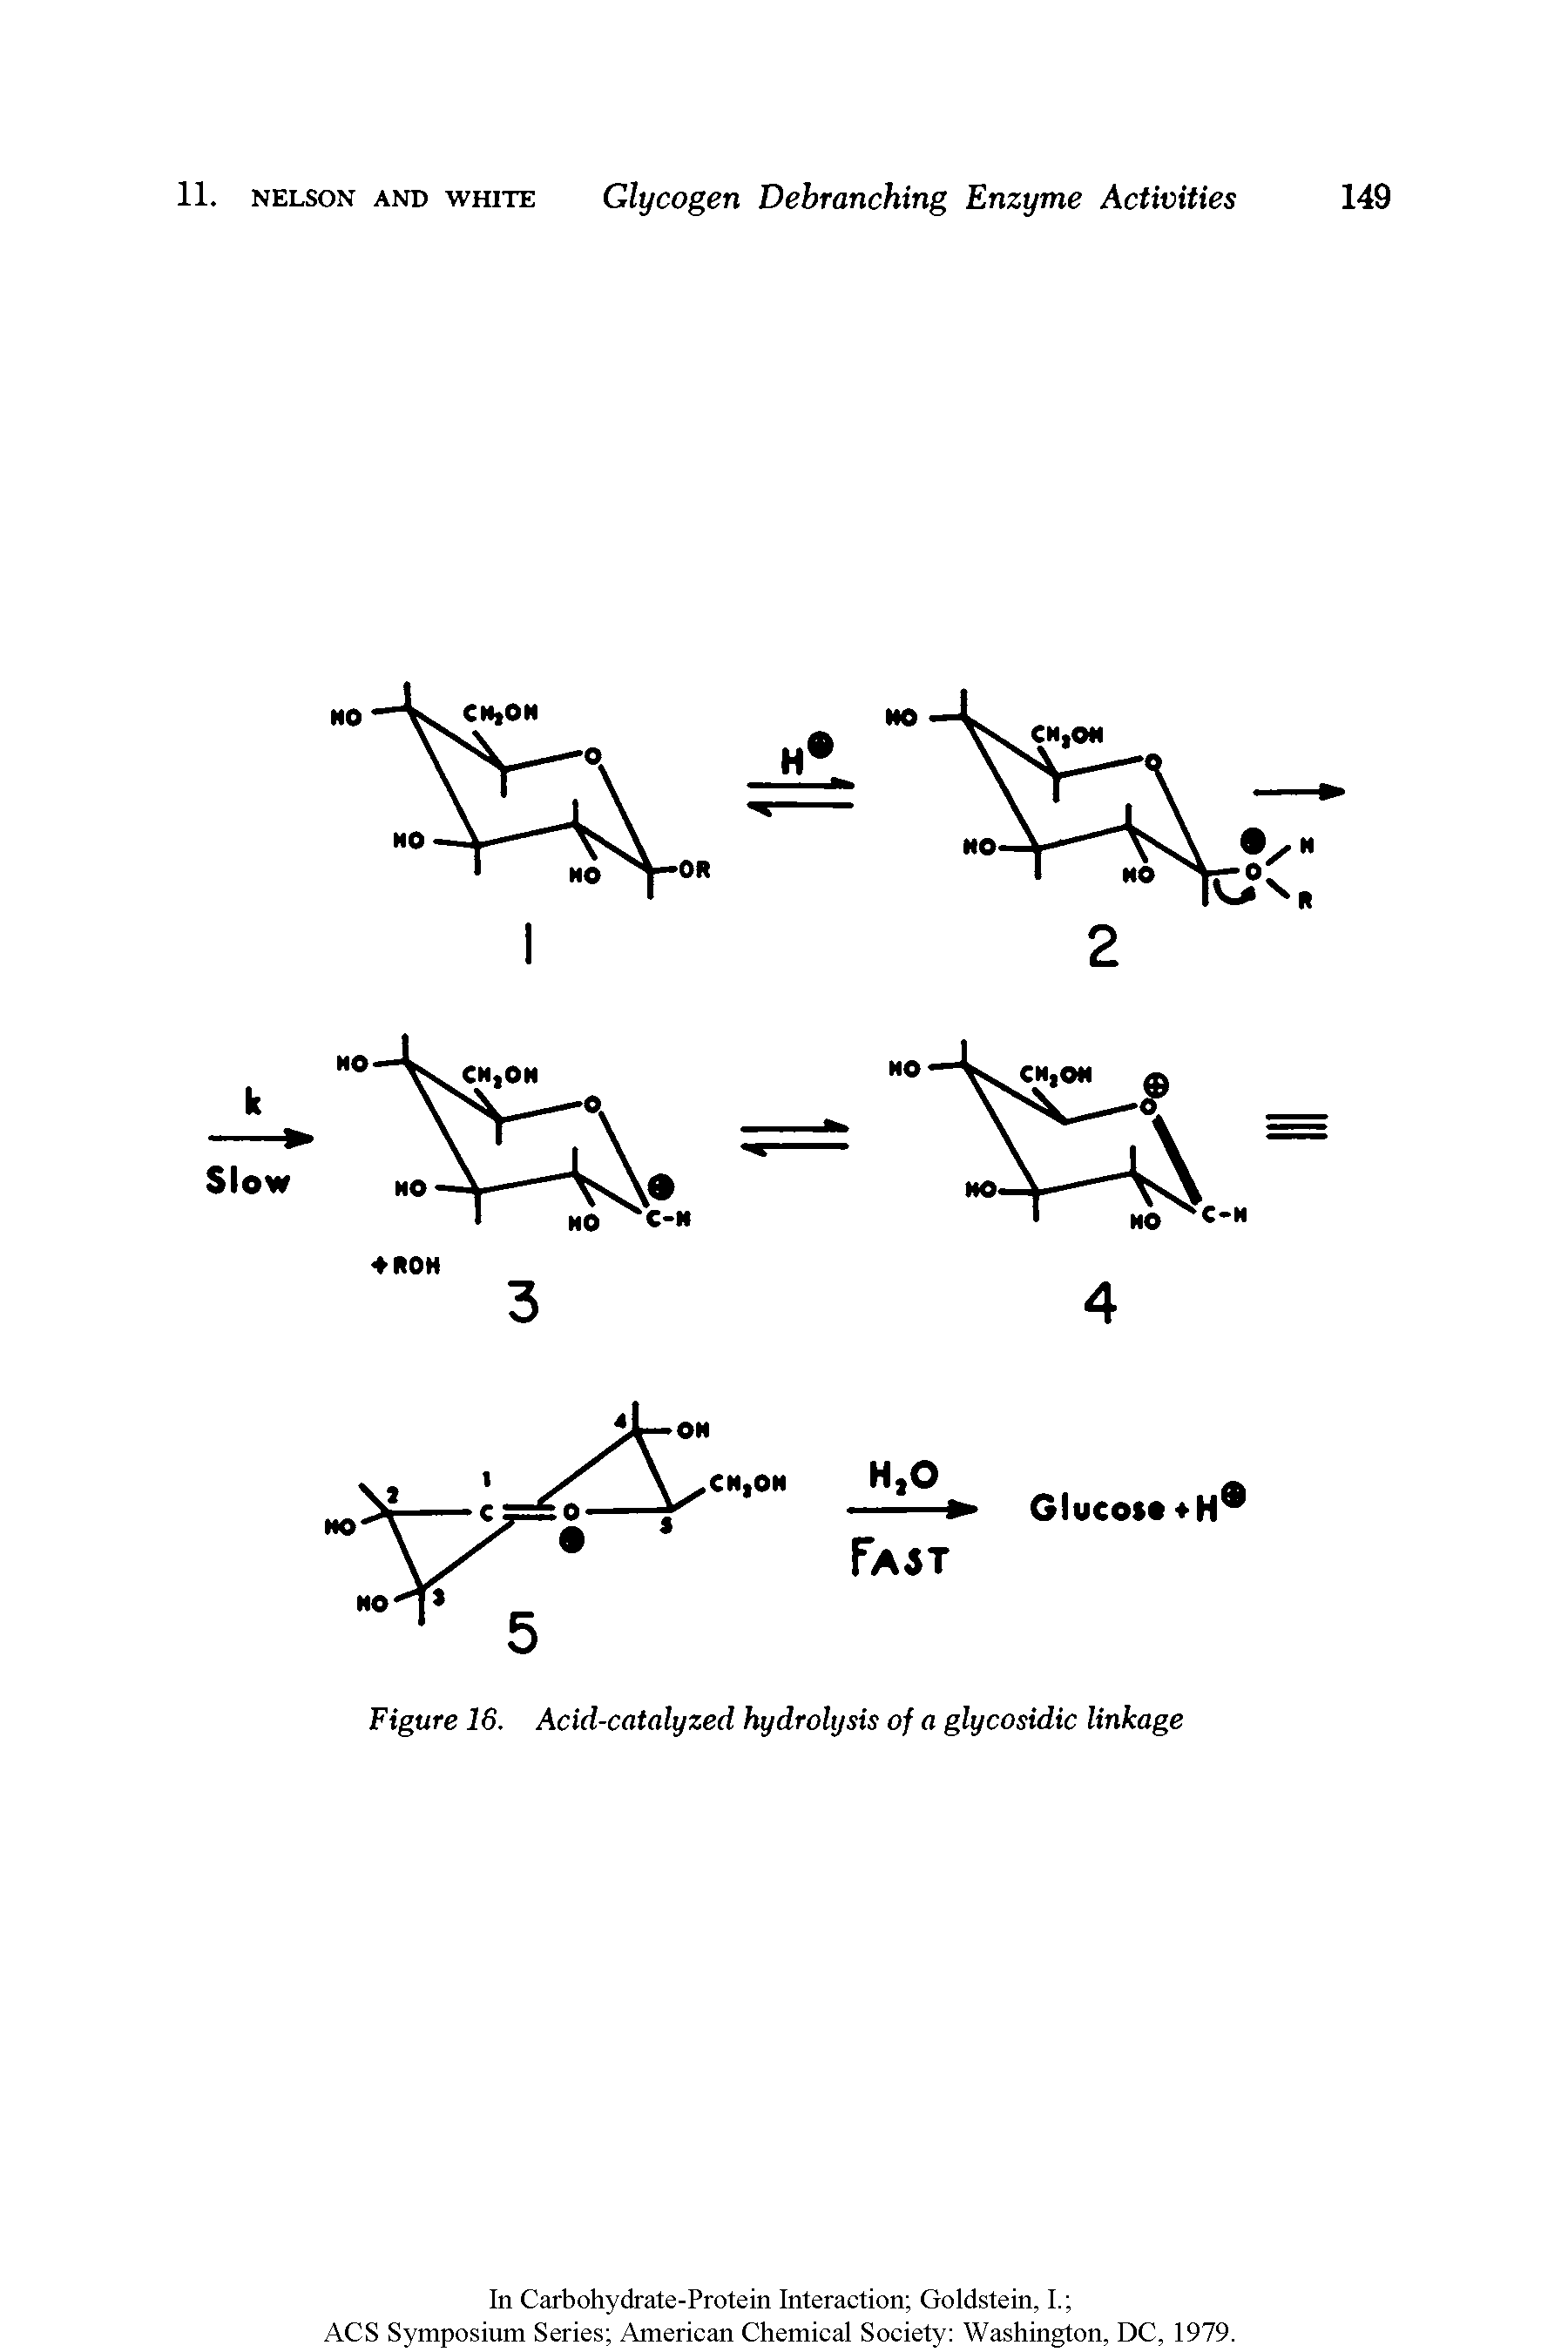 Figure 16. Acid-catalyzed hydrolysis of a glycosidic linkage...